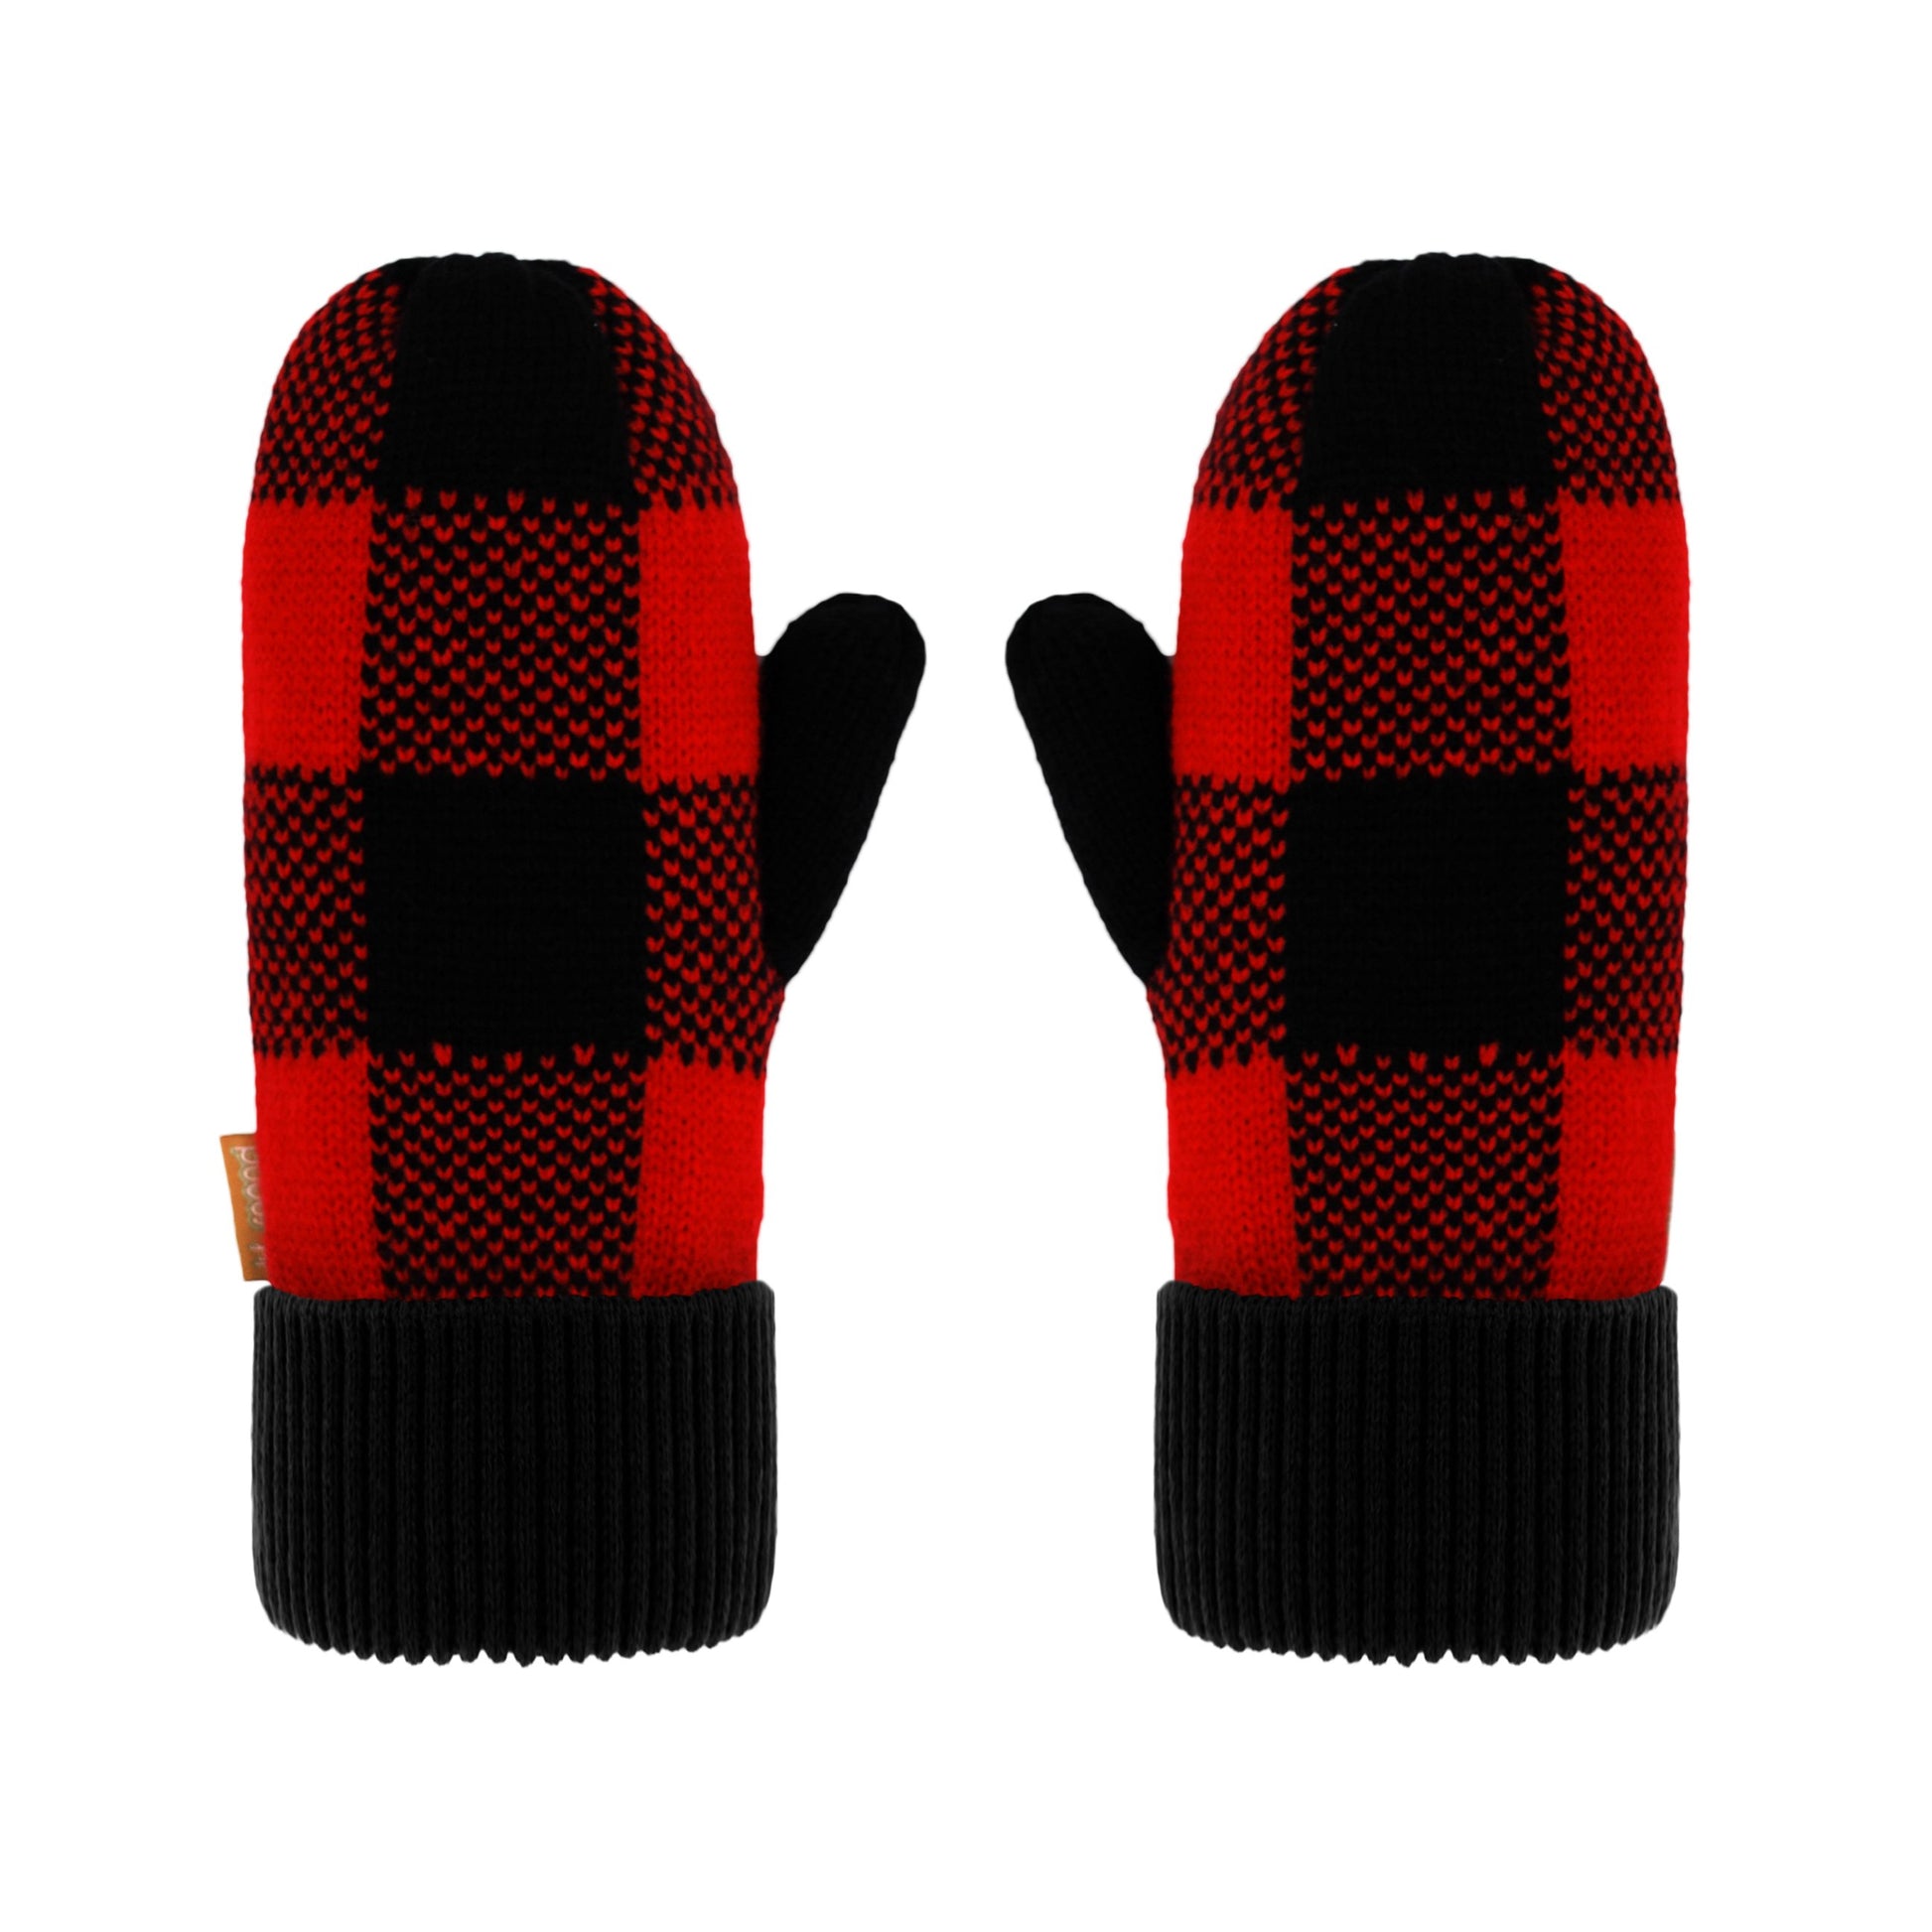 Pudus Kids Winter Knit Mittens, Fuzzy Sherpa-Lined Warm Gloves for Boys & Girls Lumberjack Red - Mittens Kids